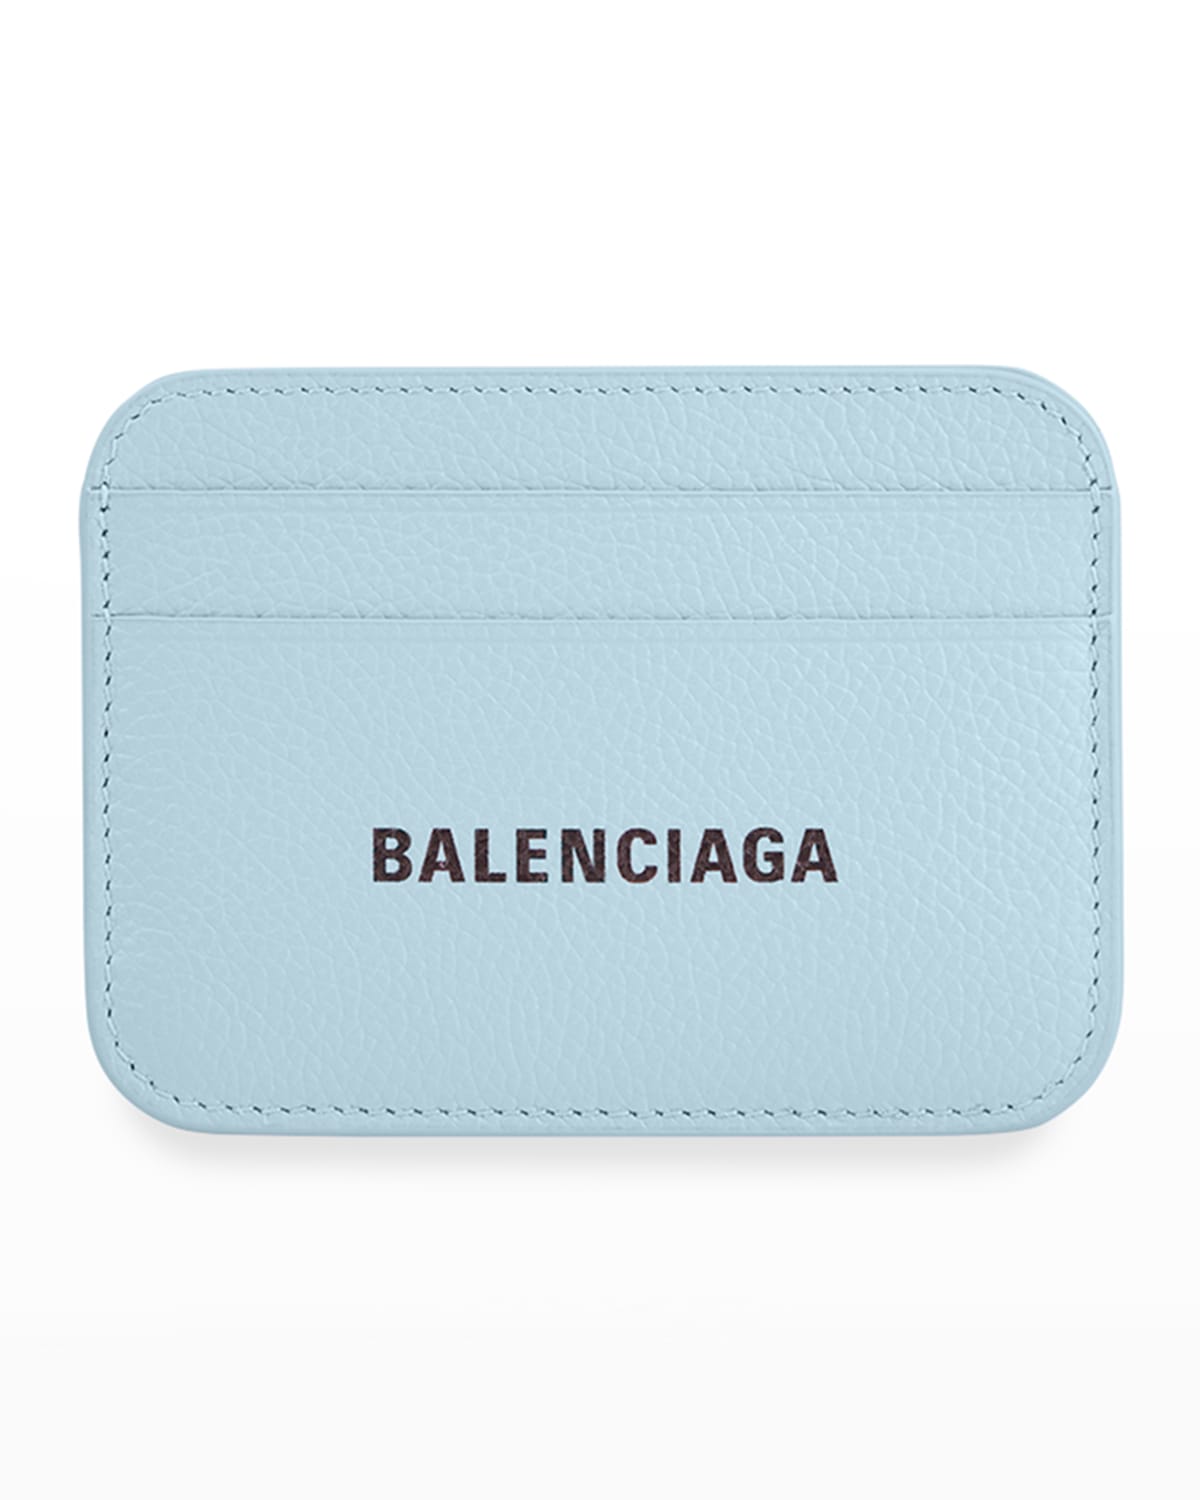 Balenciaga Cash Card Holder - Grained Calf